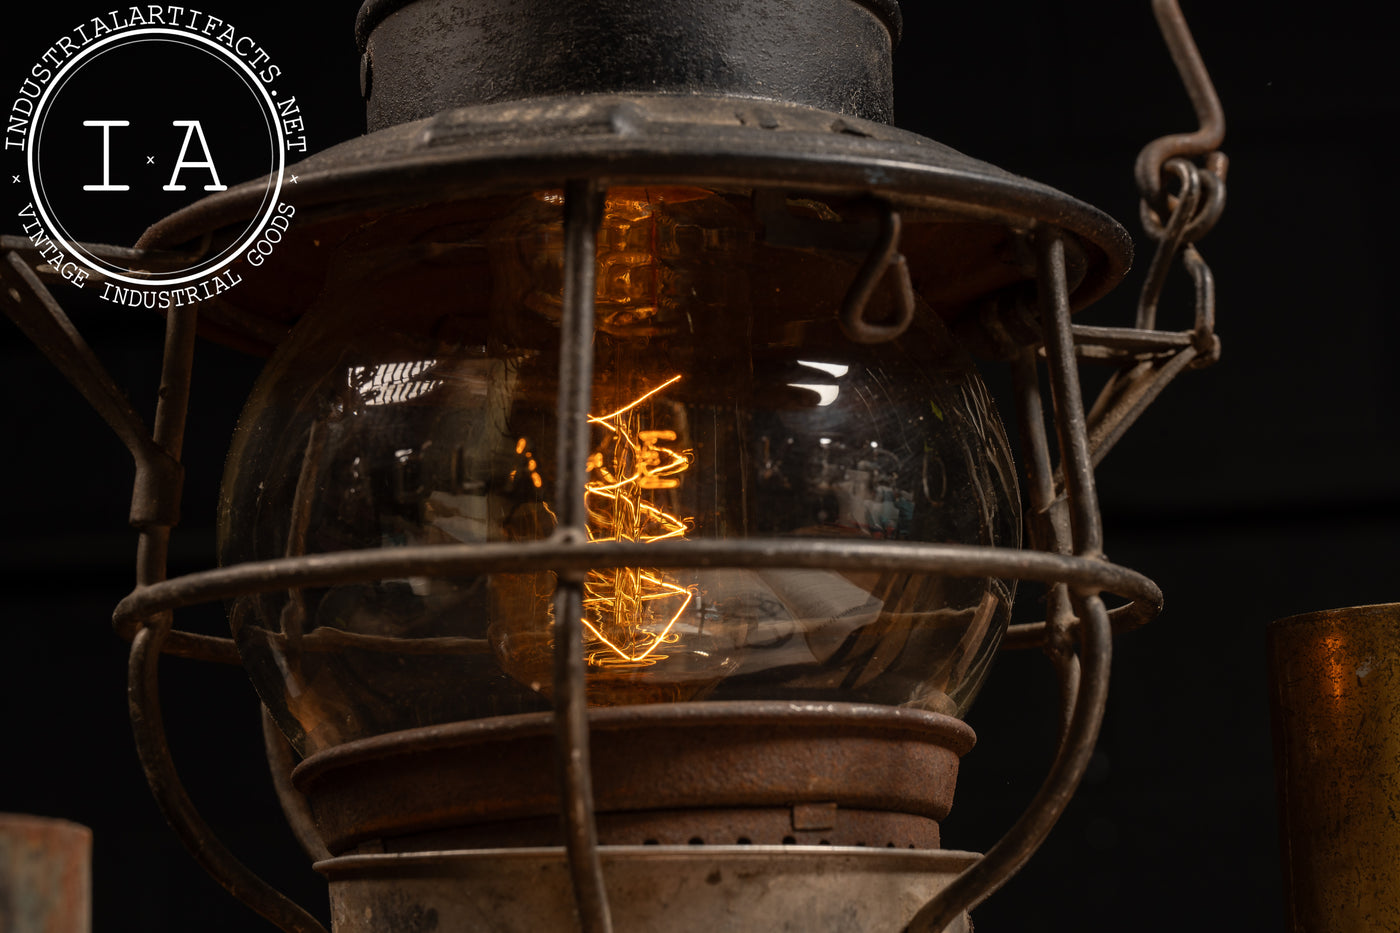 Antique Converted Kerosene Lantern